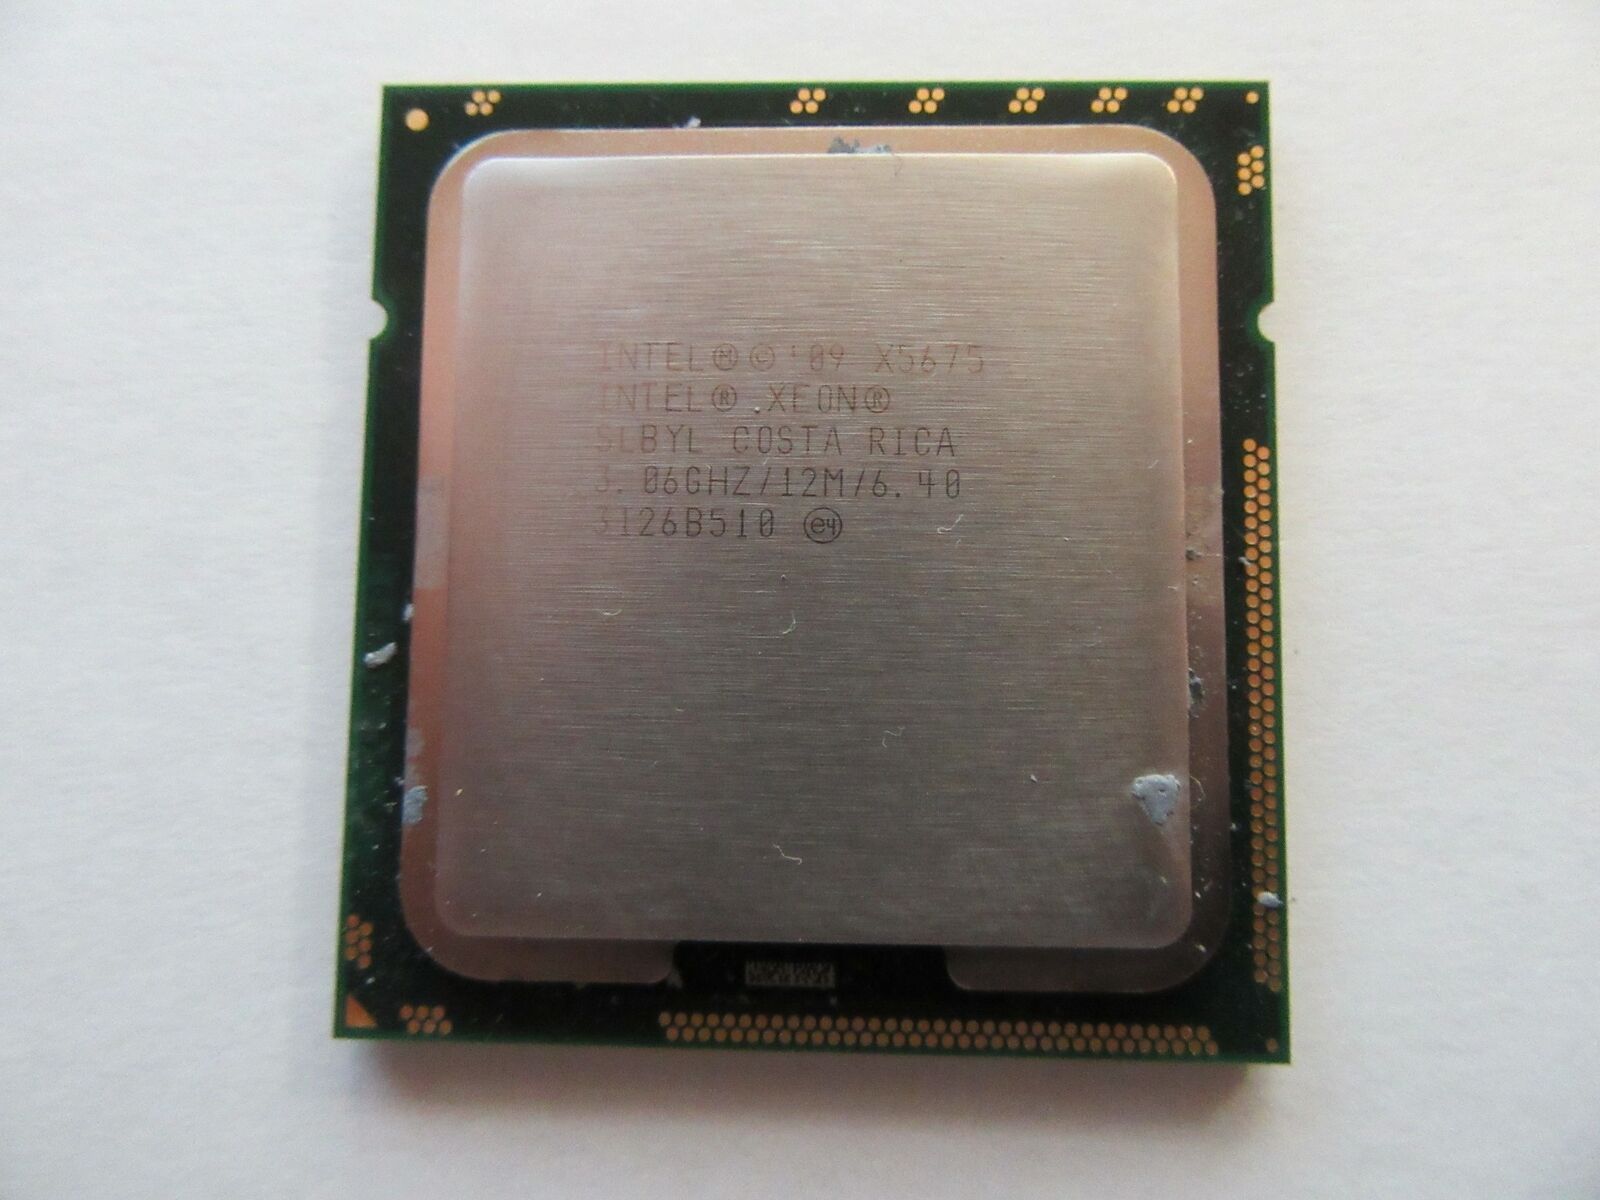 Intel SLBYL Xeon X5675 3.06GHz/12M/6.40 Socket 1366 CPU Processor 6-Core LGA1366